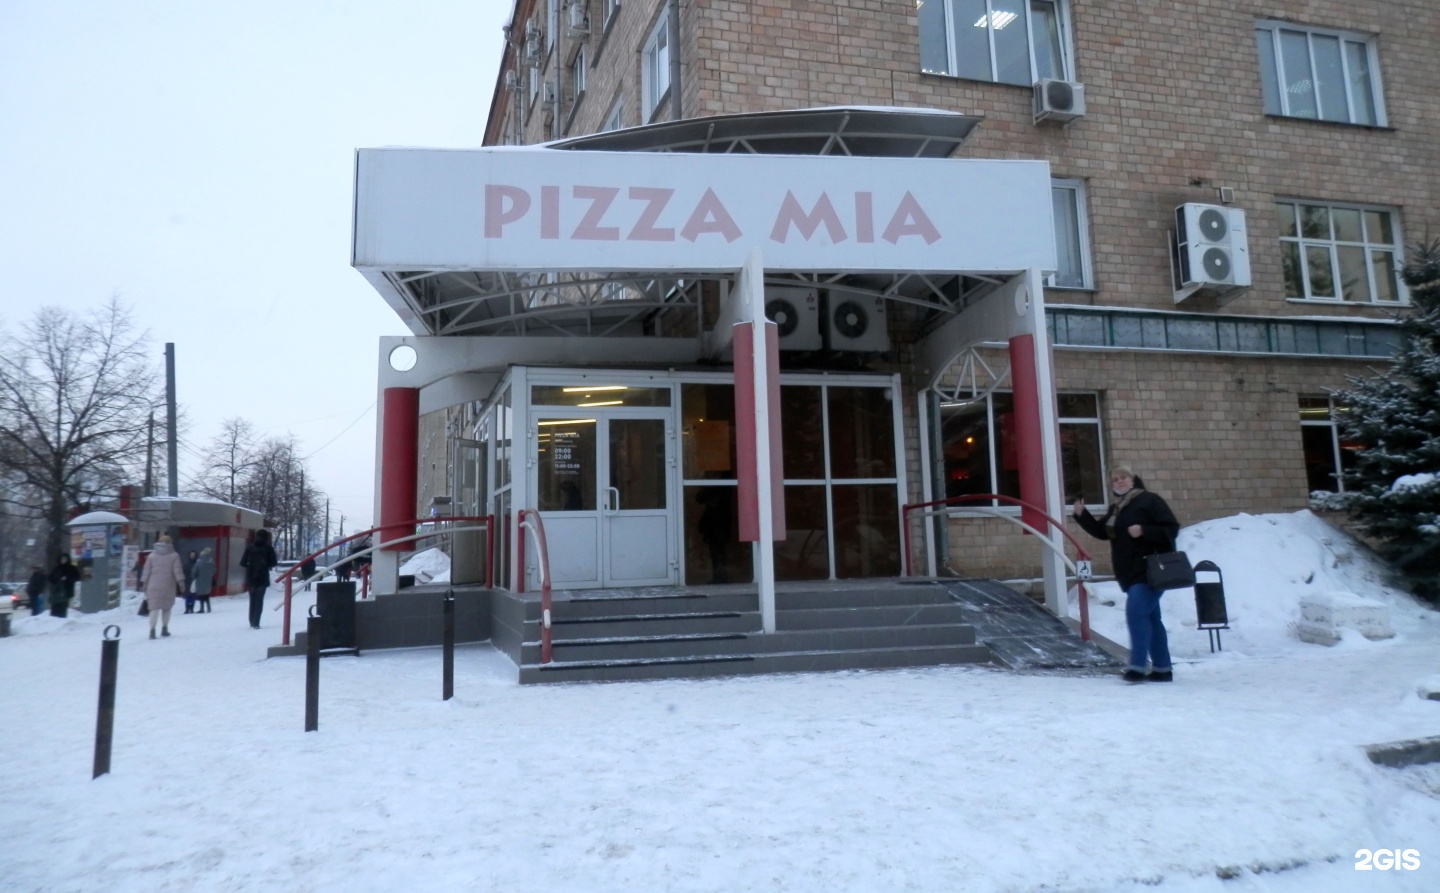 Pizza Mia Челябинск. Ленина 83 Челябинск пицца Миа.